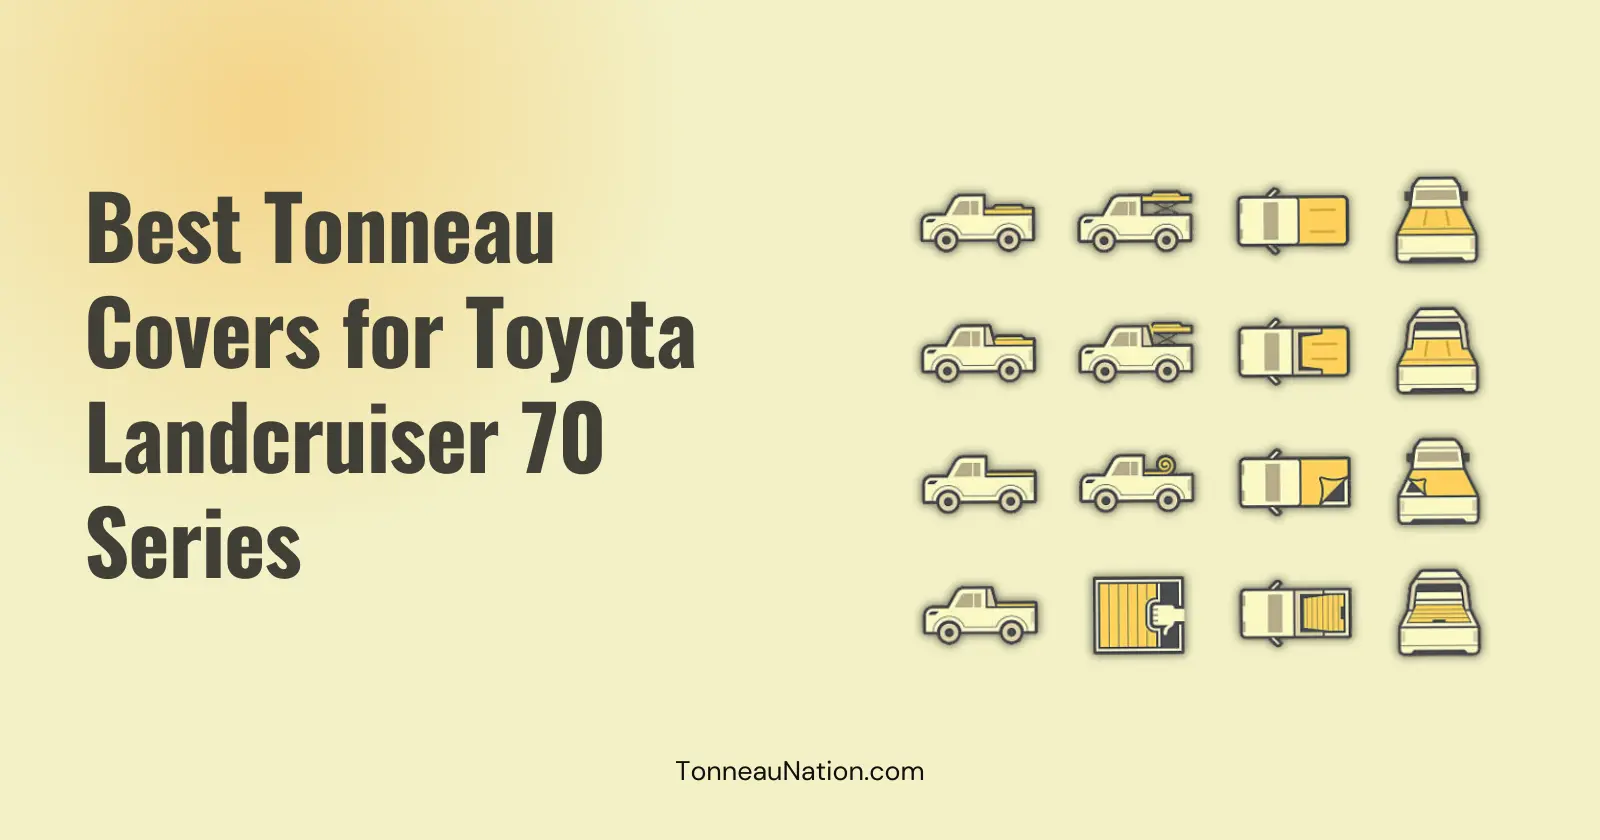 Tonneau cover for Toyota Landcruiser 70 Series